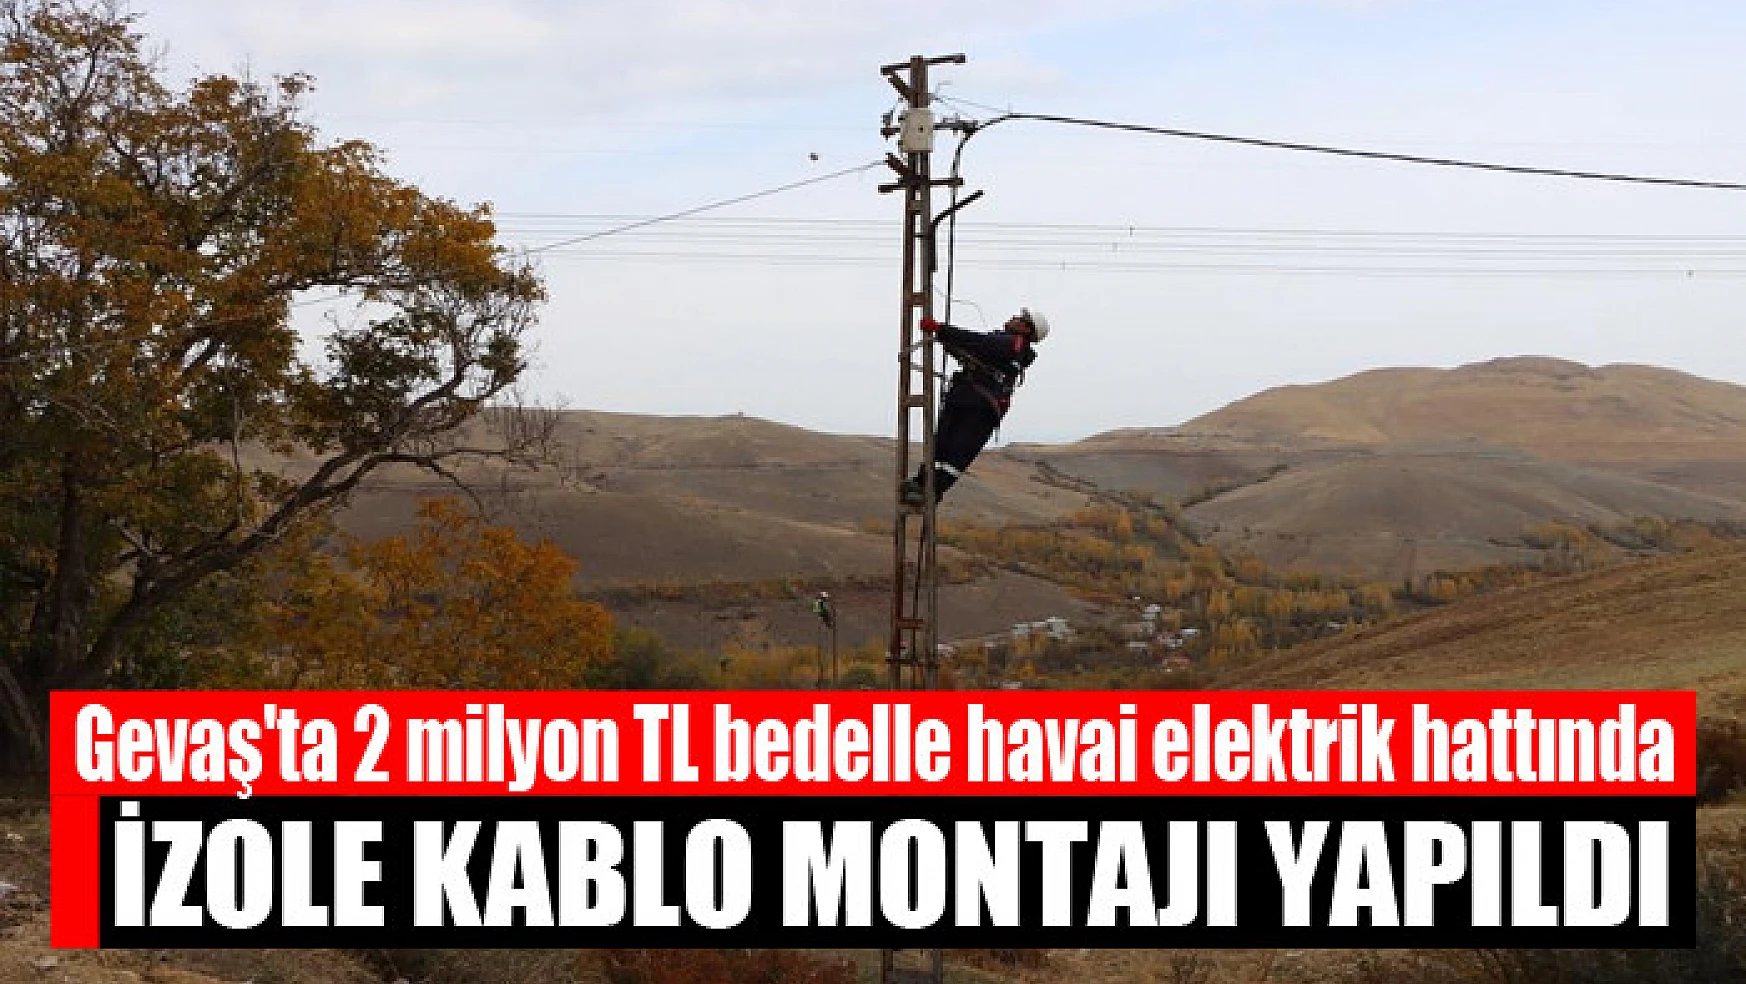 Gevaş'ta 2 milyon TL bedelle havai elektrik hattında izole kablo montajı yapıldı